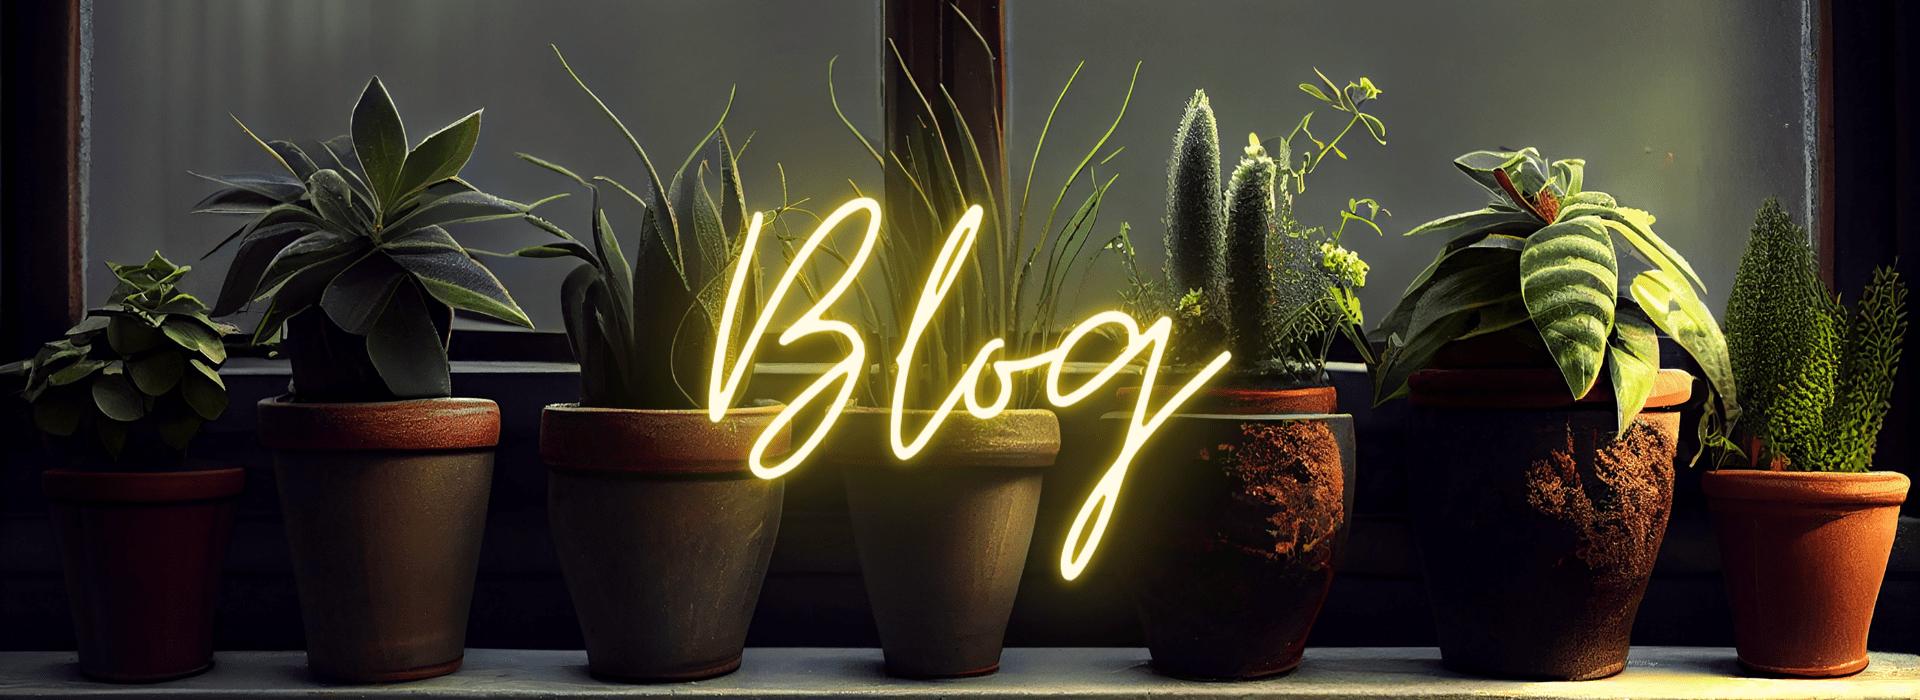 blog-artificial plants